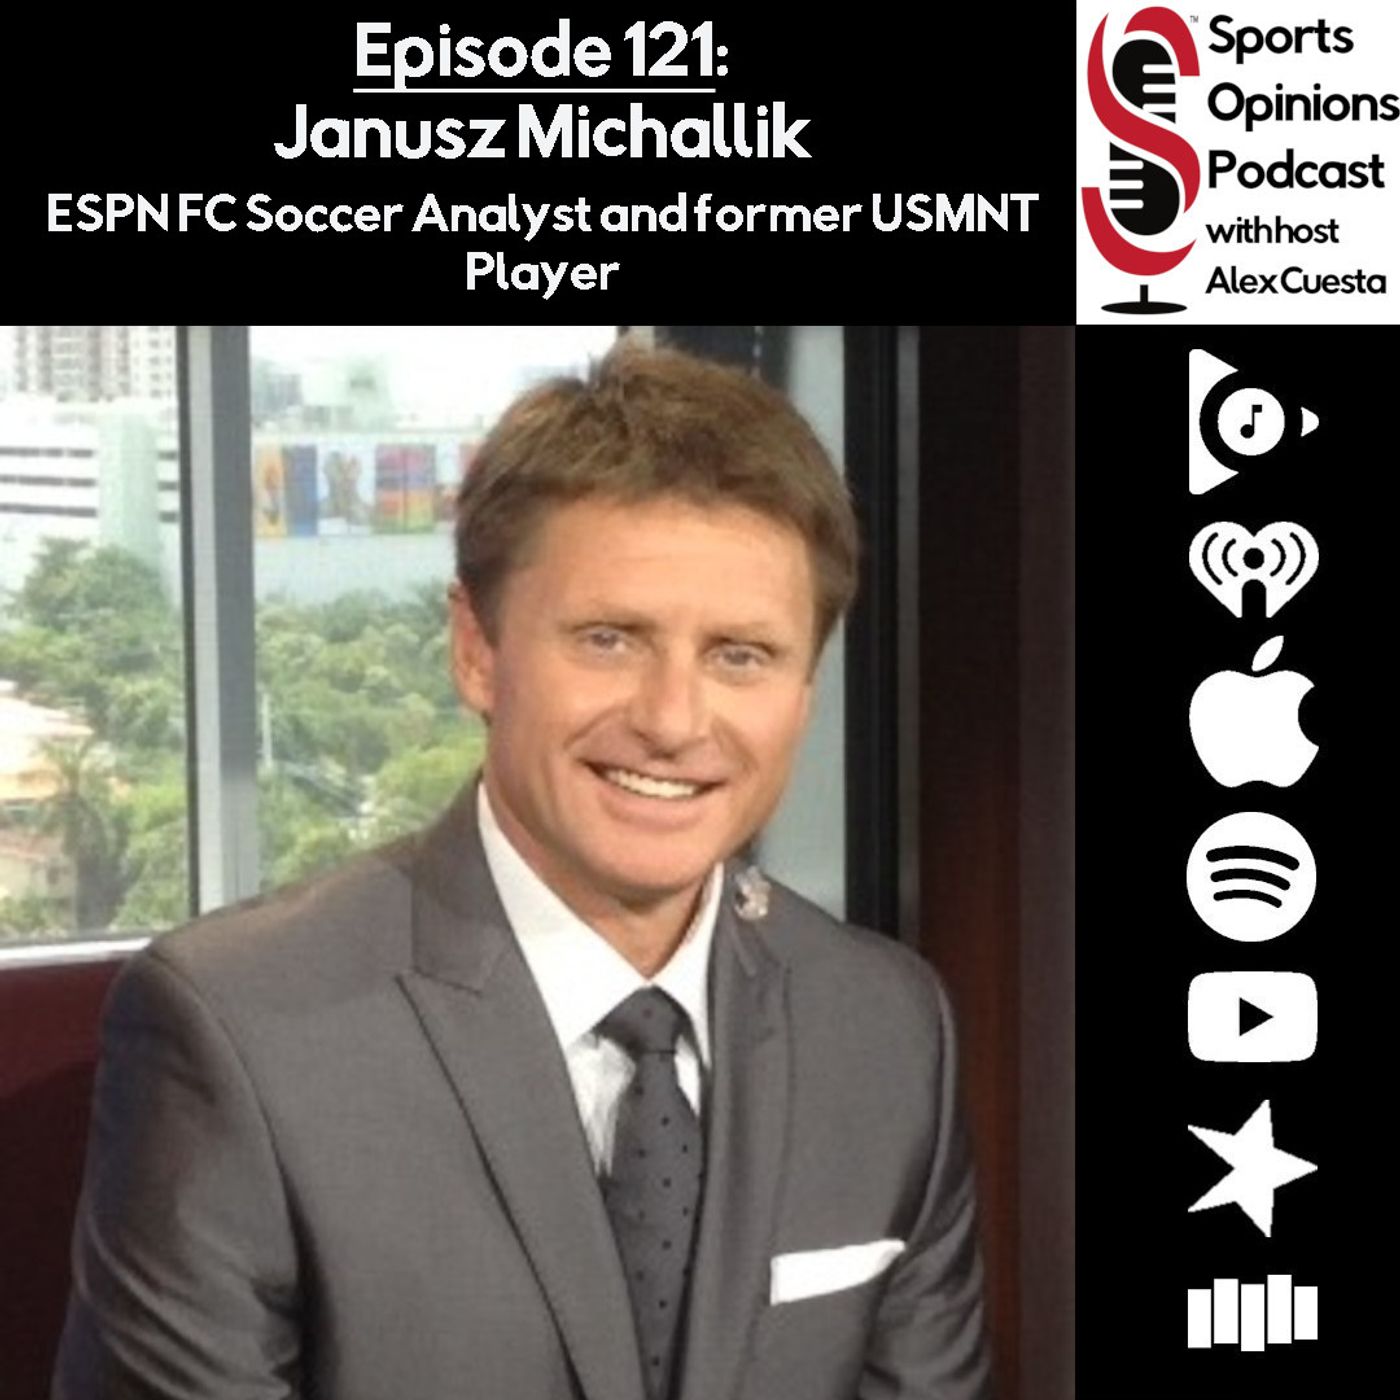 SOP: 121. Janusz Michallik, ESPN FC Soccer Analyst and former USMNT Player